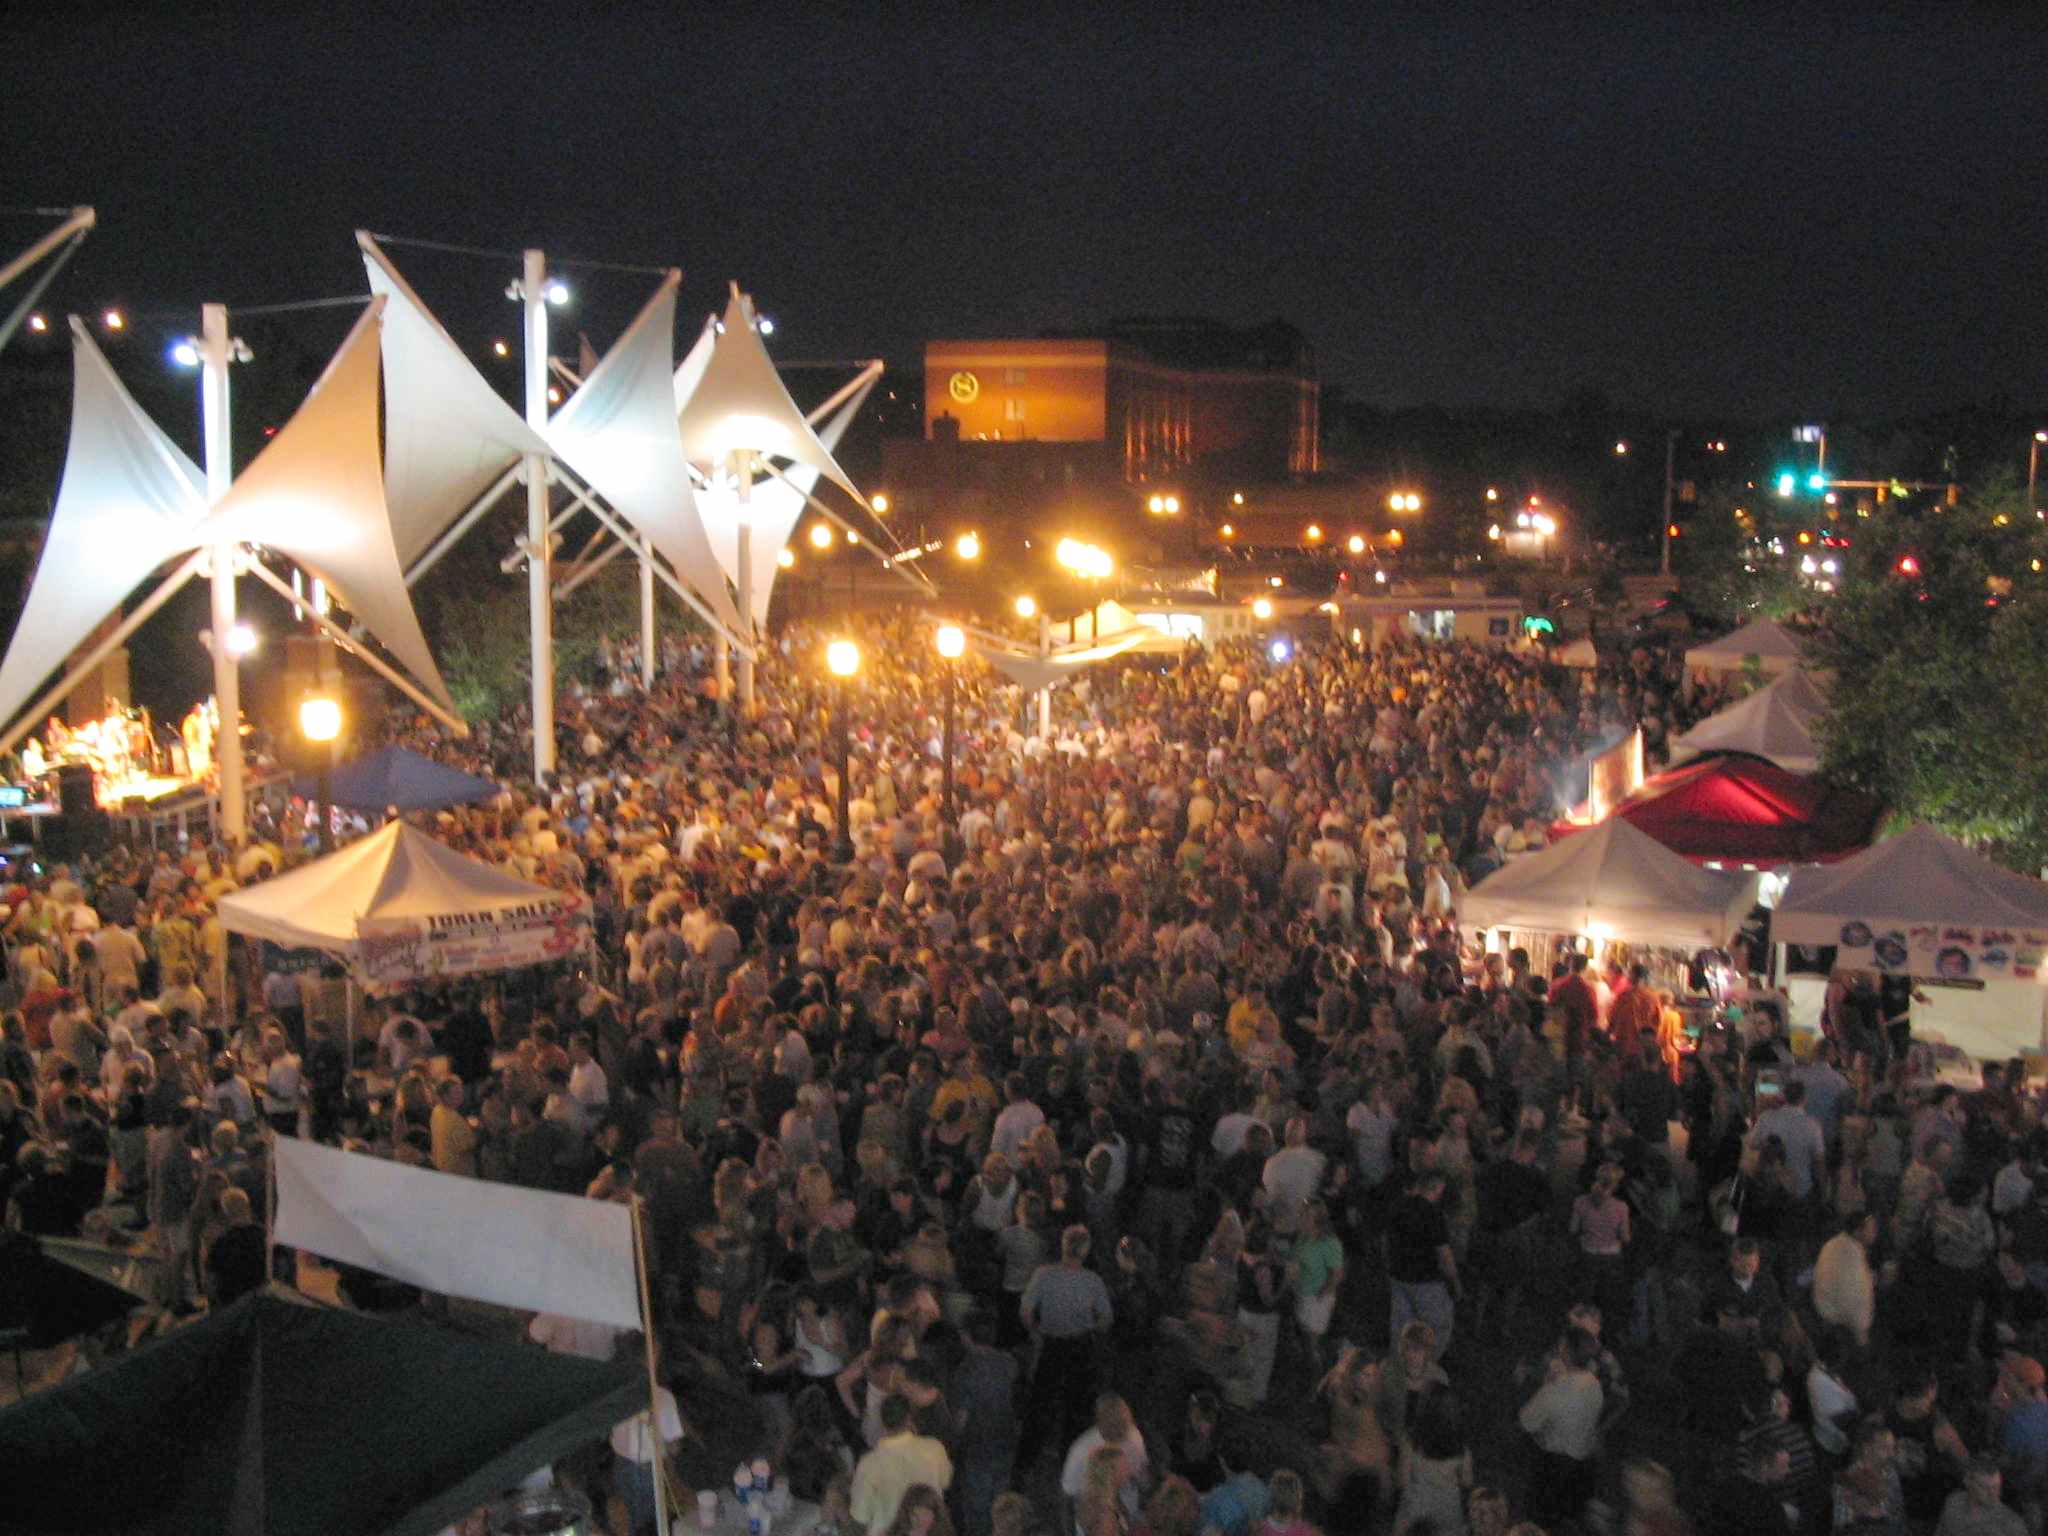 Falls River Square - Festivals and Events